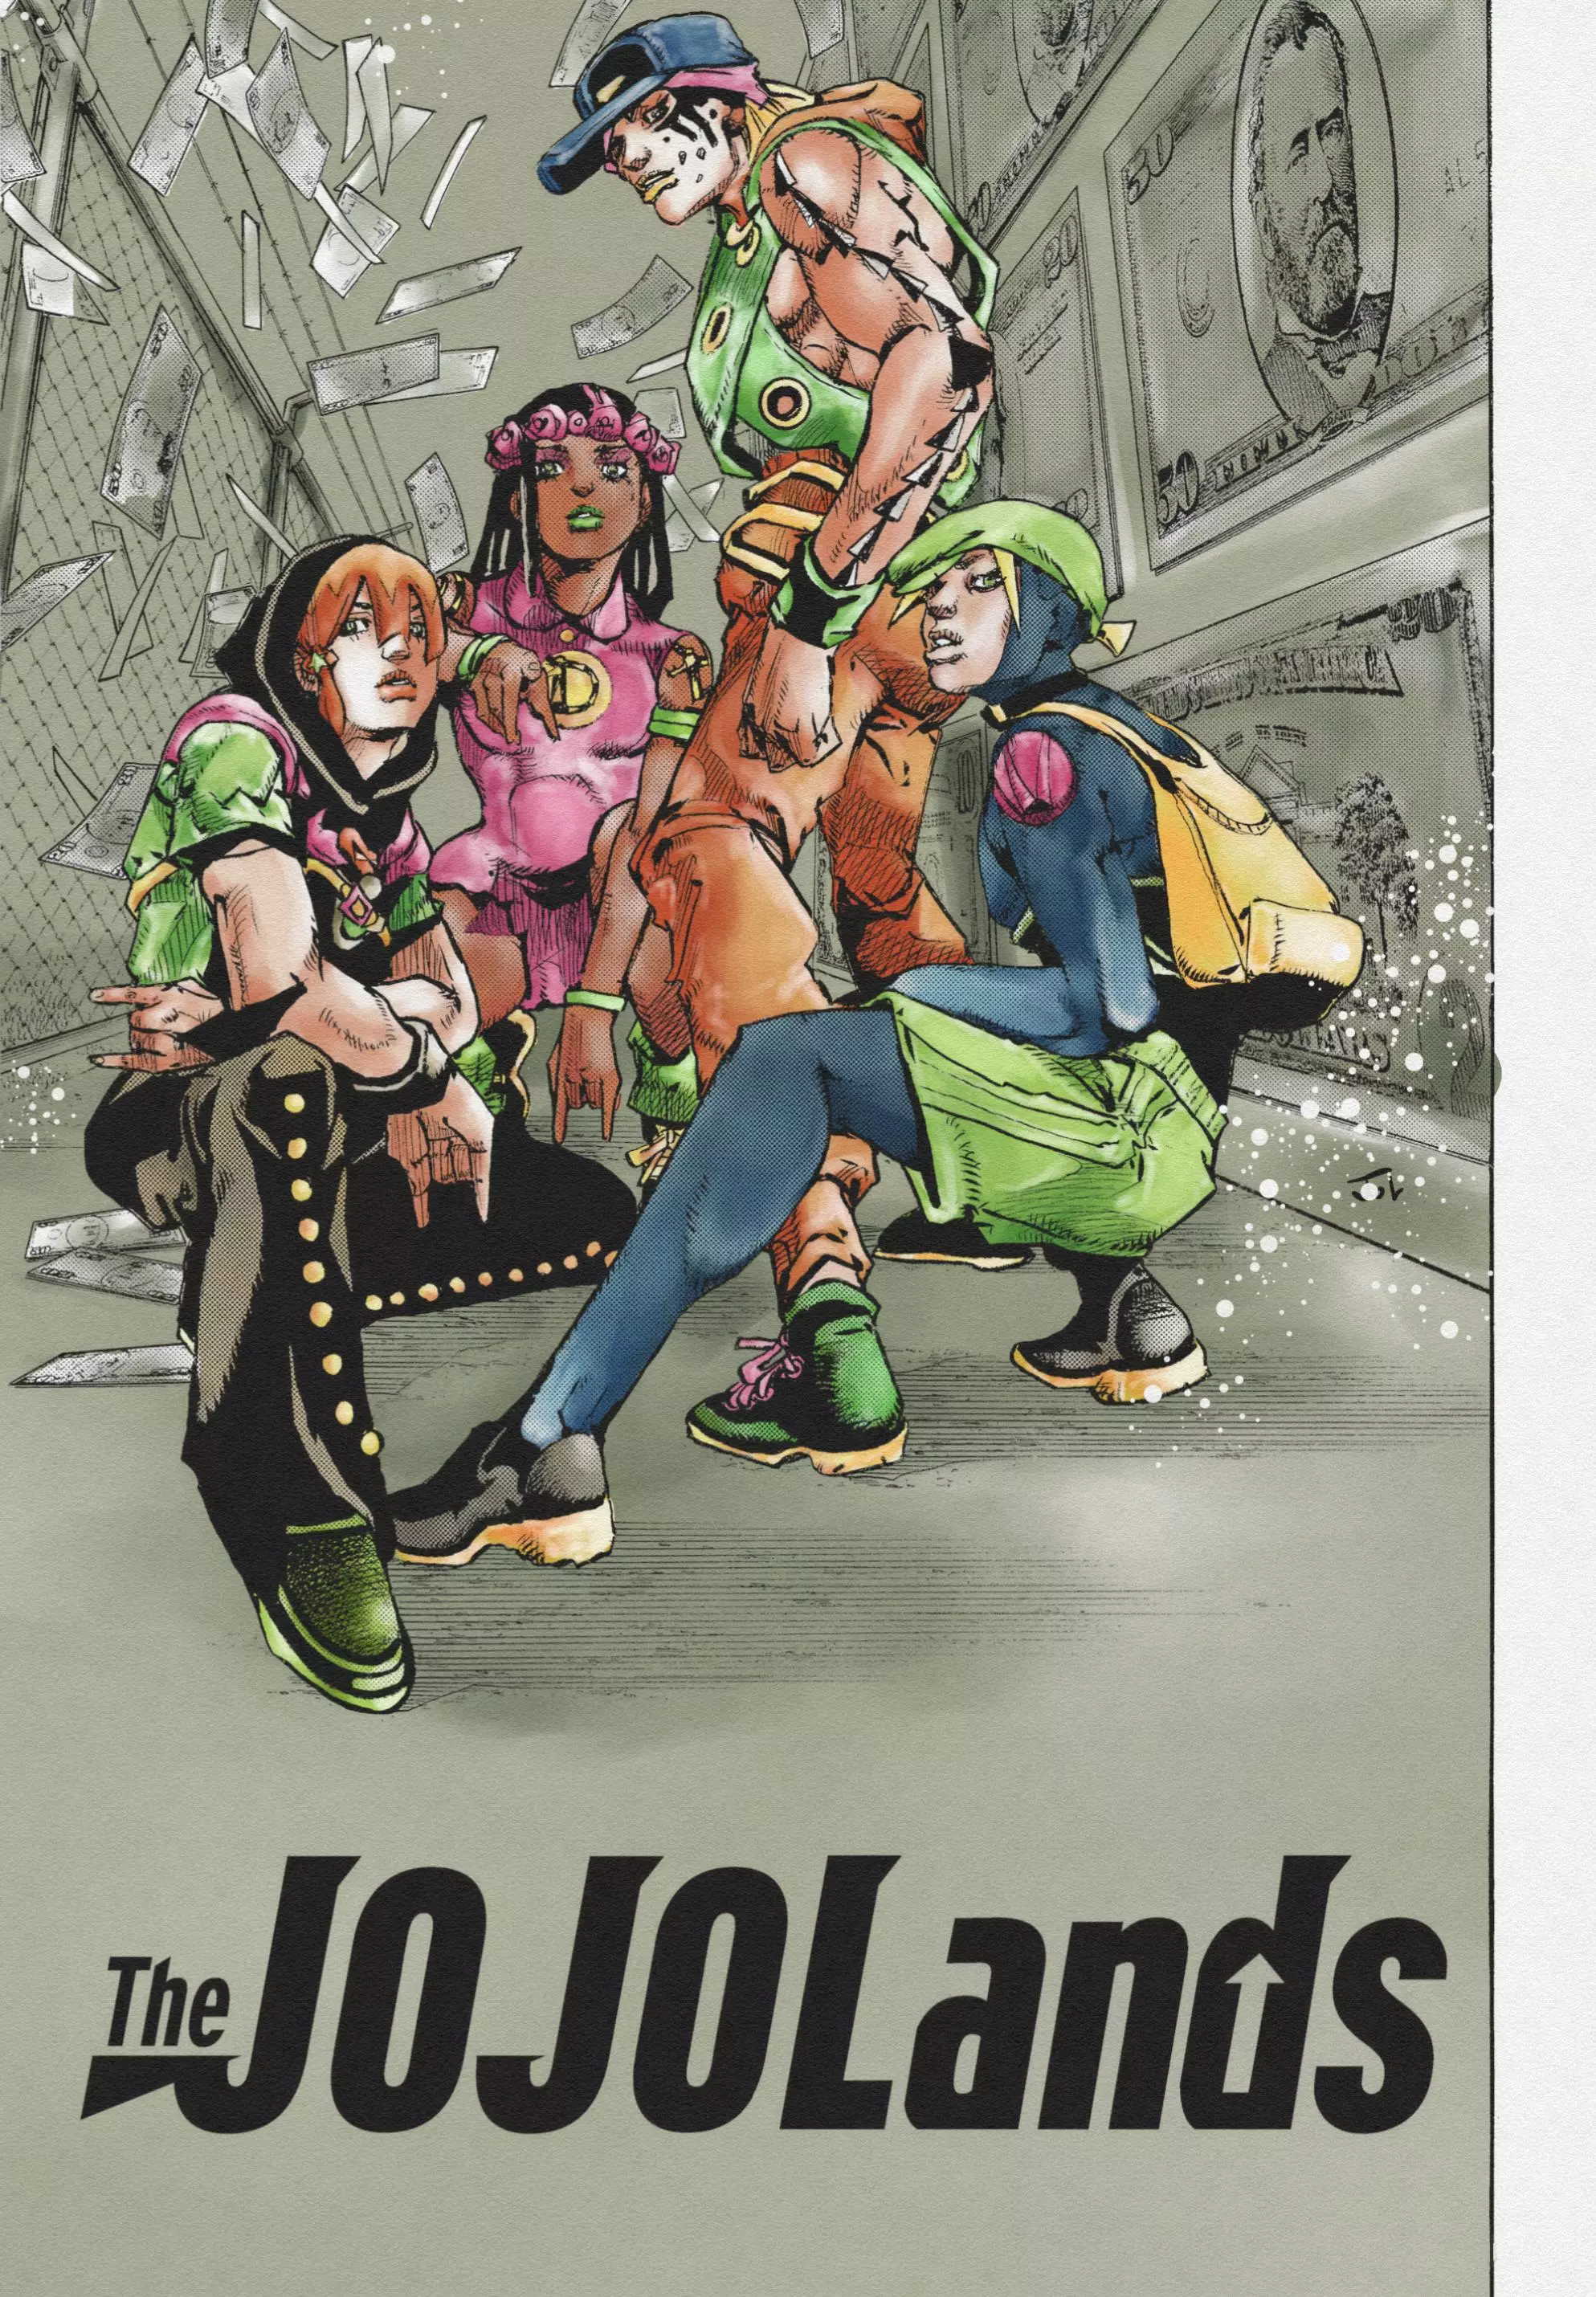 Jojo's Bizarre Adventure Part 9 - The Jojolands (Fan-Colored) - 6 page 36-10113225